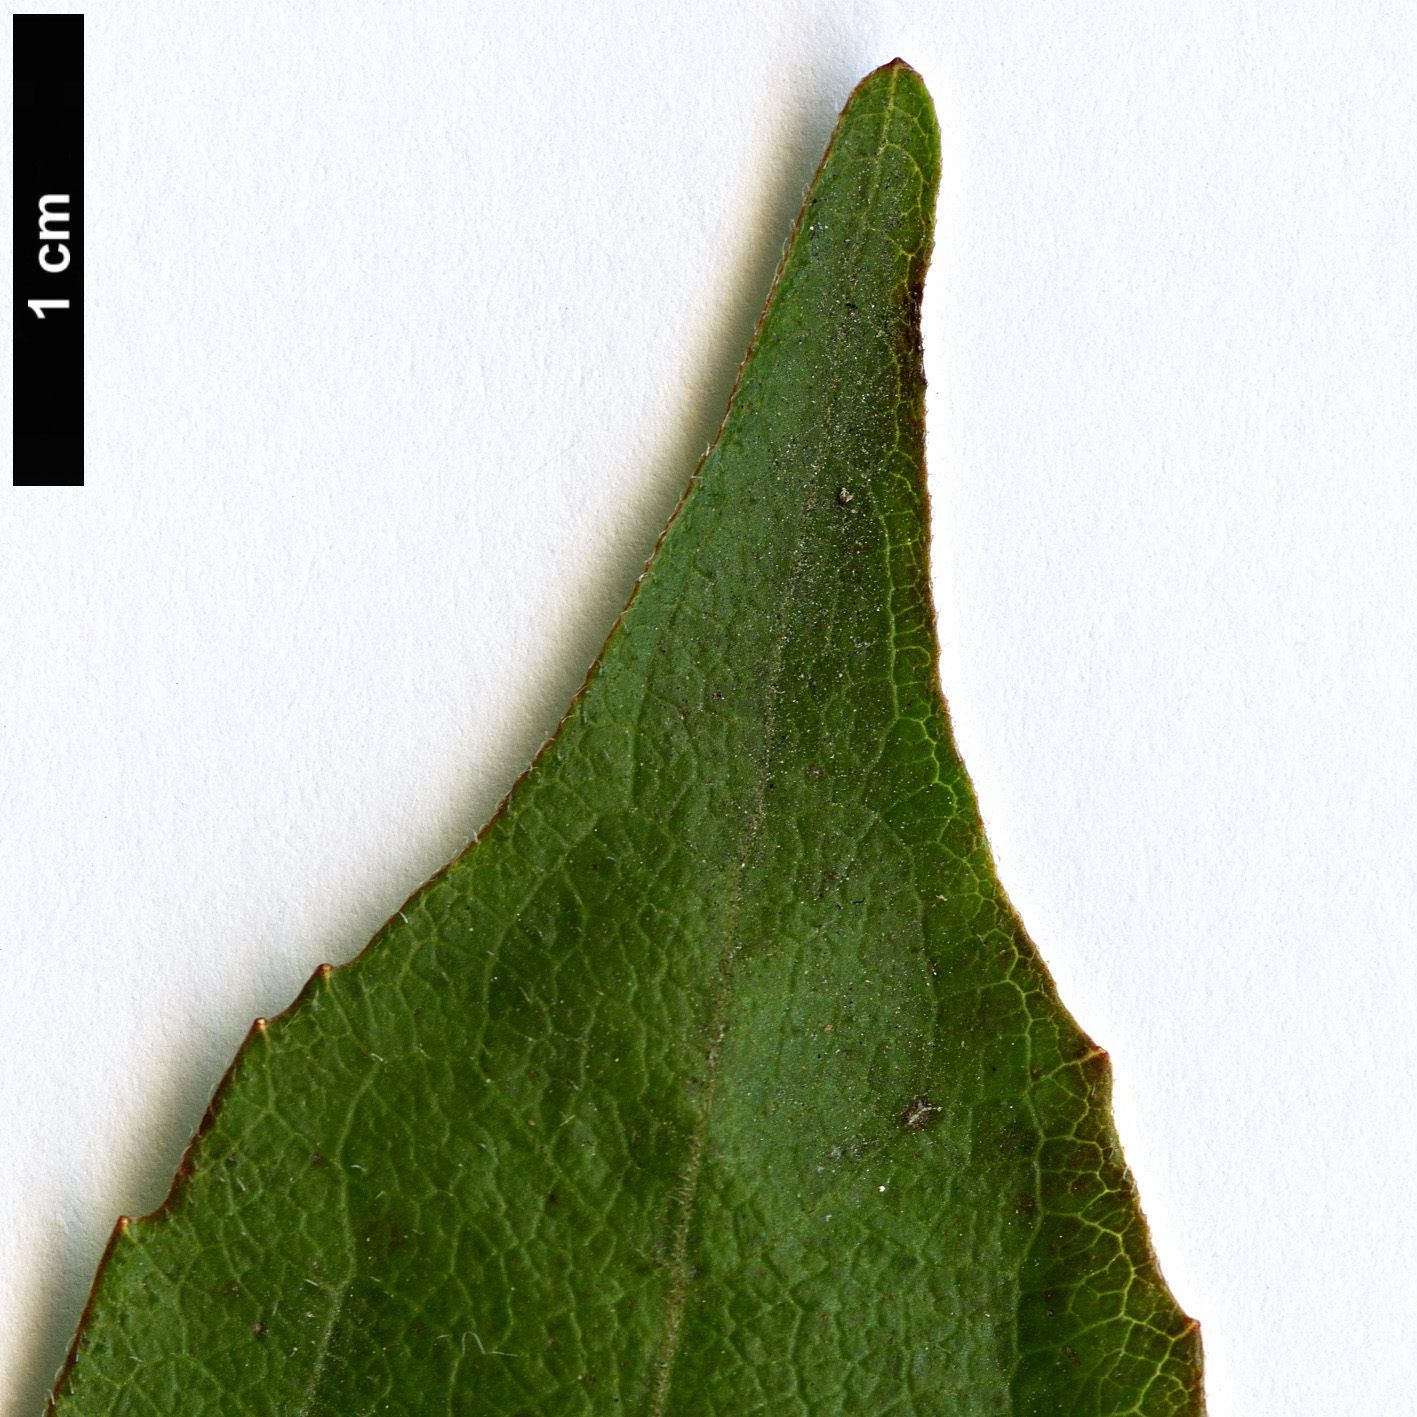 High resolution image: Family: Caprifoliaceae - Genus: Diabelia - Taxon: serrata